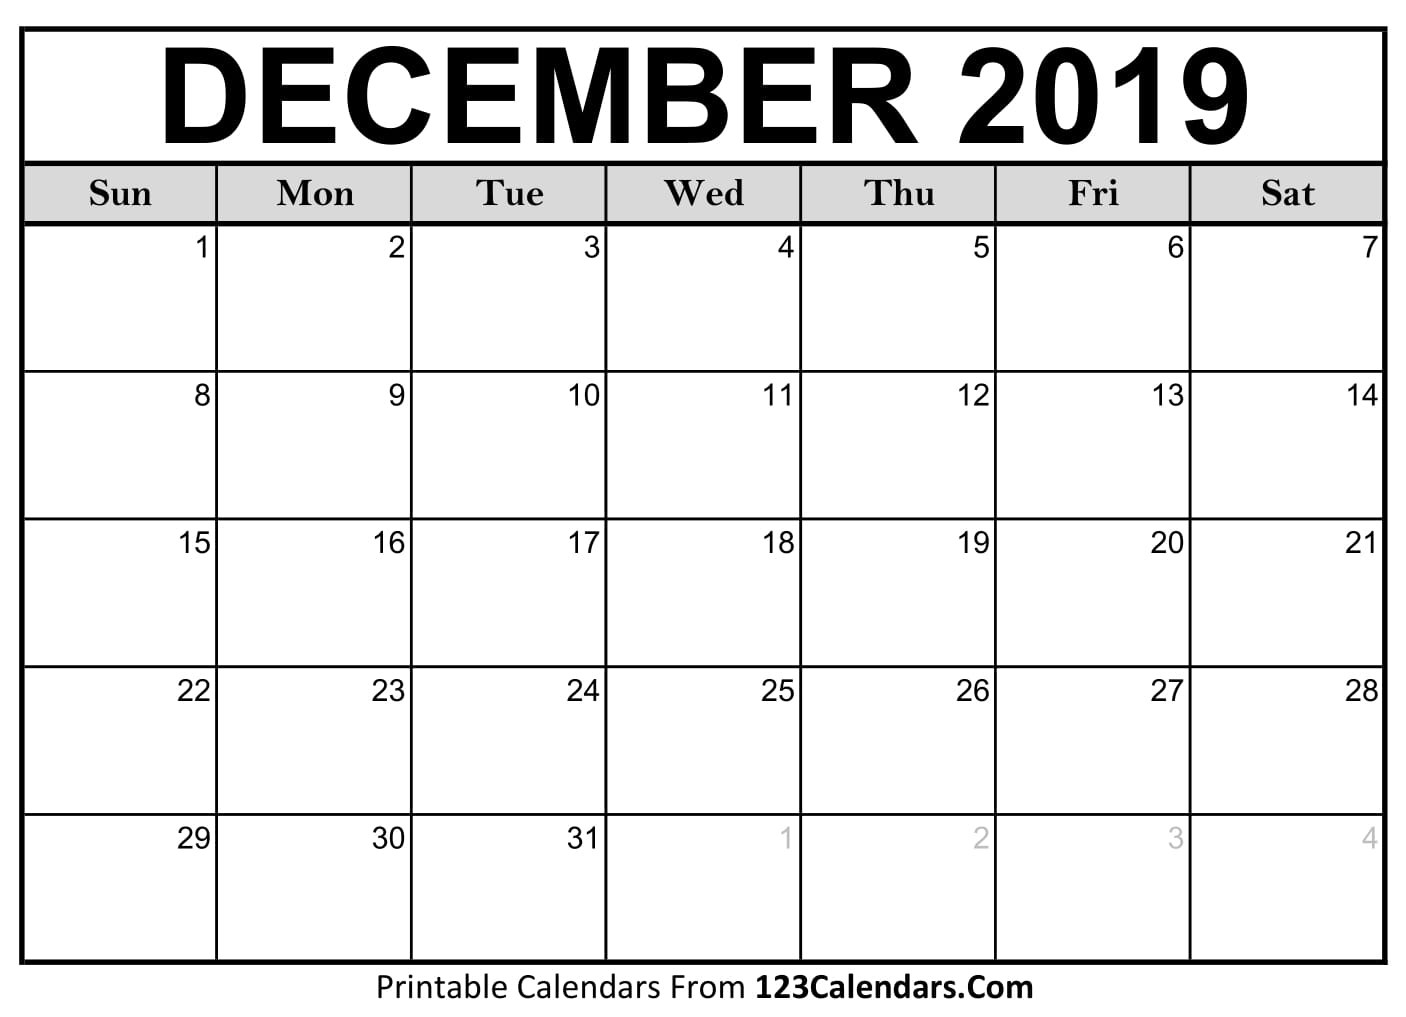 december-2019-calendar-blank-easily-printable-123calendars